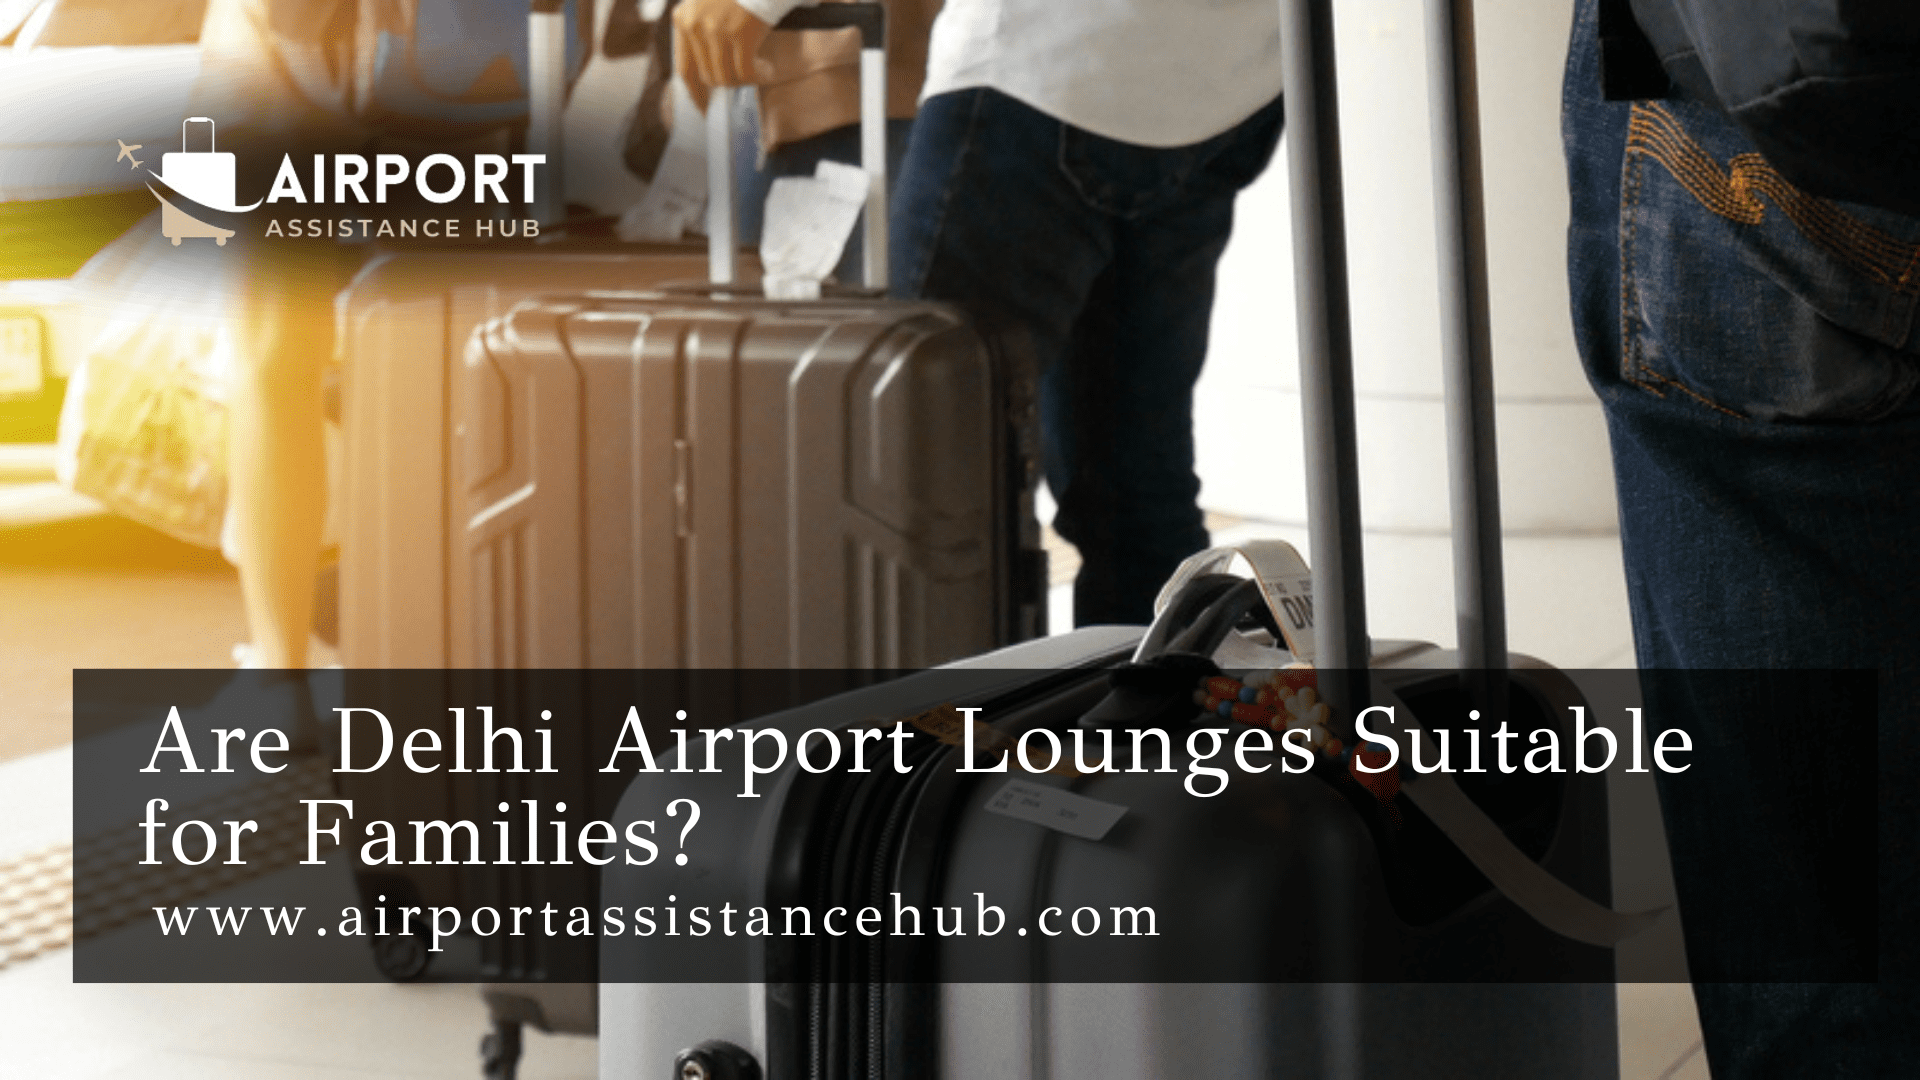 Delhi Airport lounges